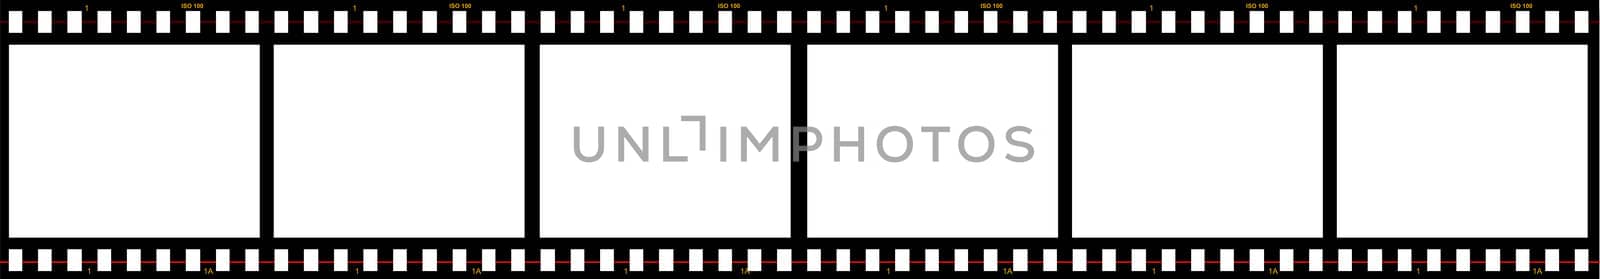 Six blank film frames by jeremywhat